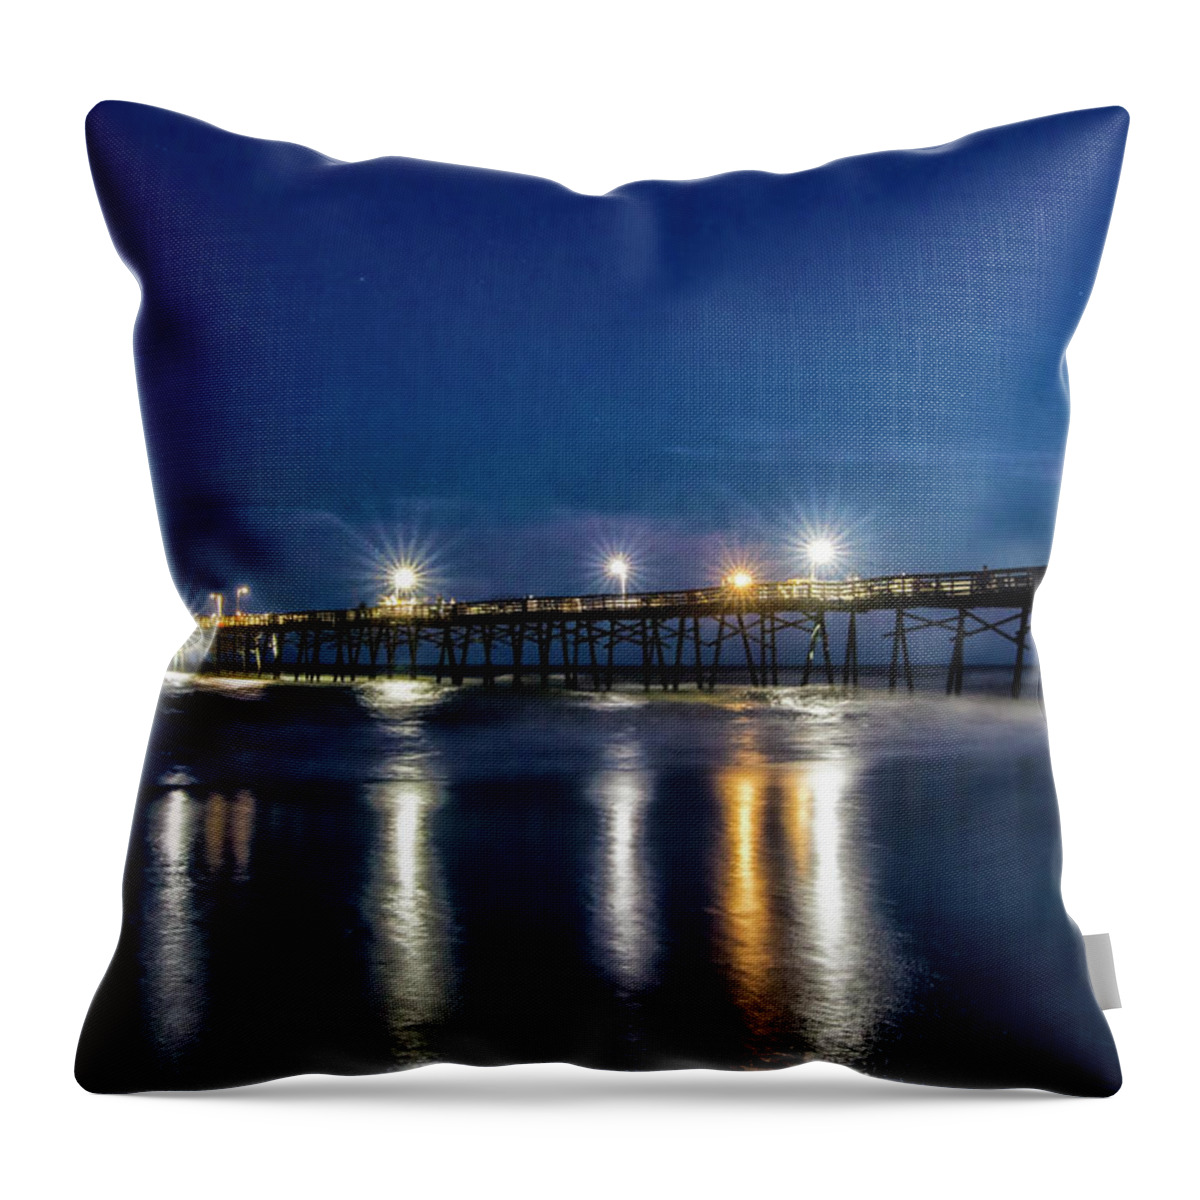 Fishing Pier At Night Throw Pillow featuring the photograph The Oceanana Fishing Pier at Night by Bob Decker